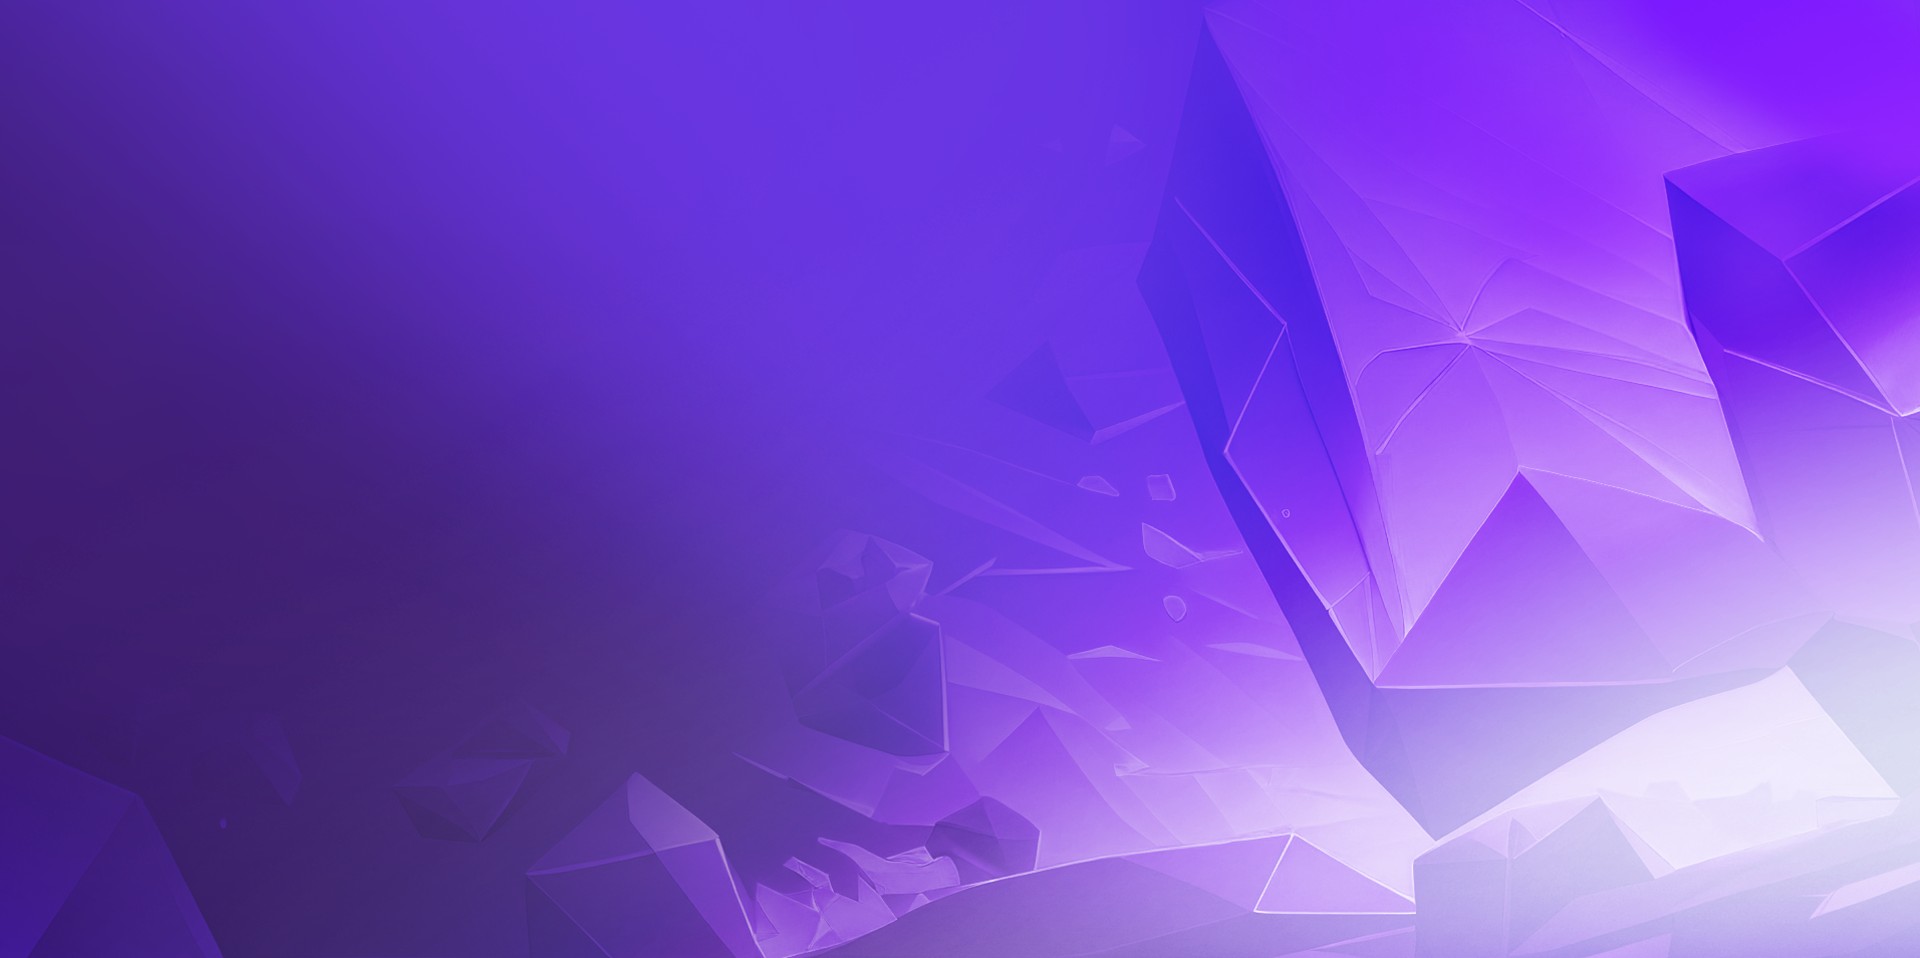 A purple background